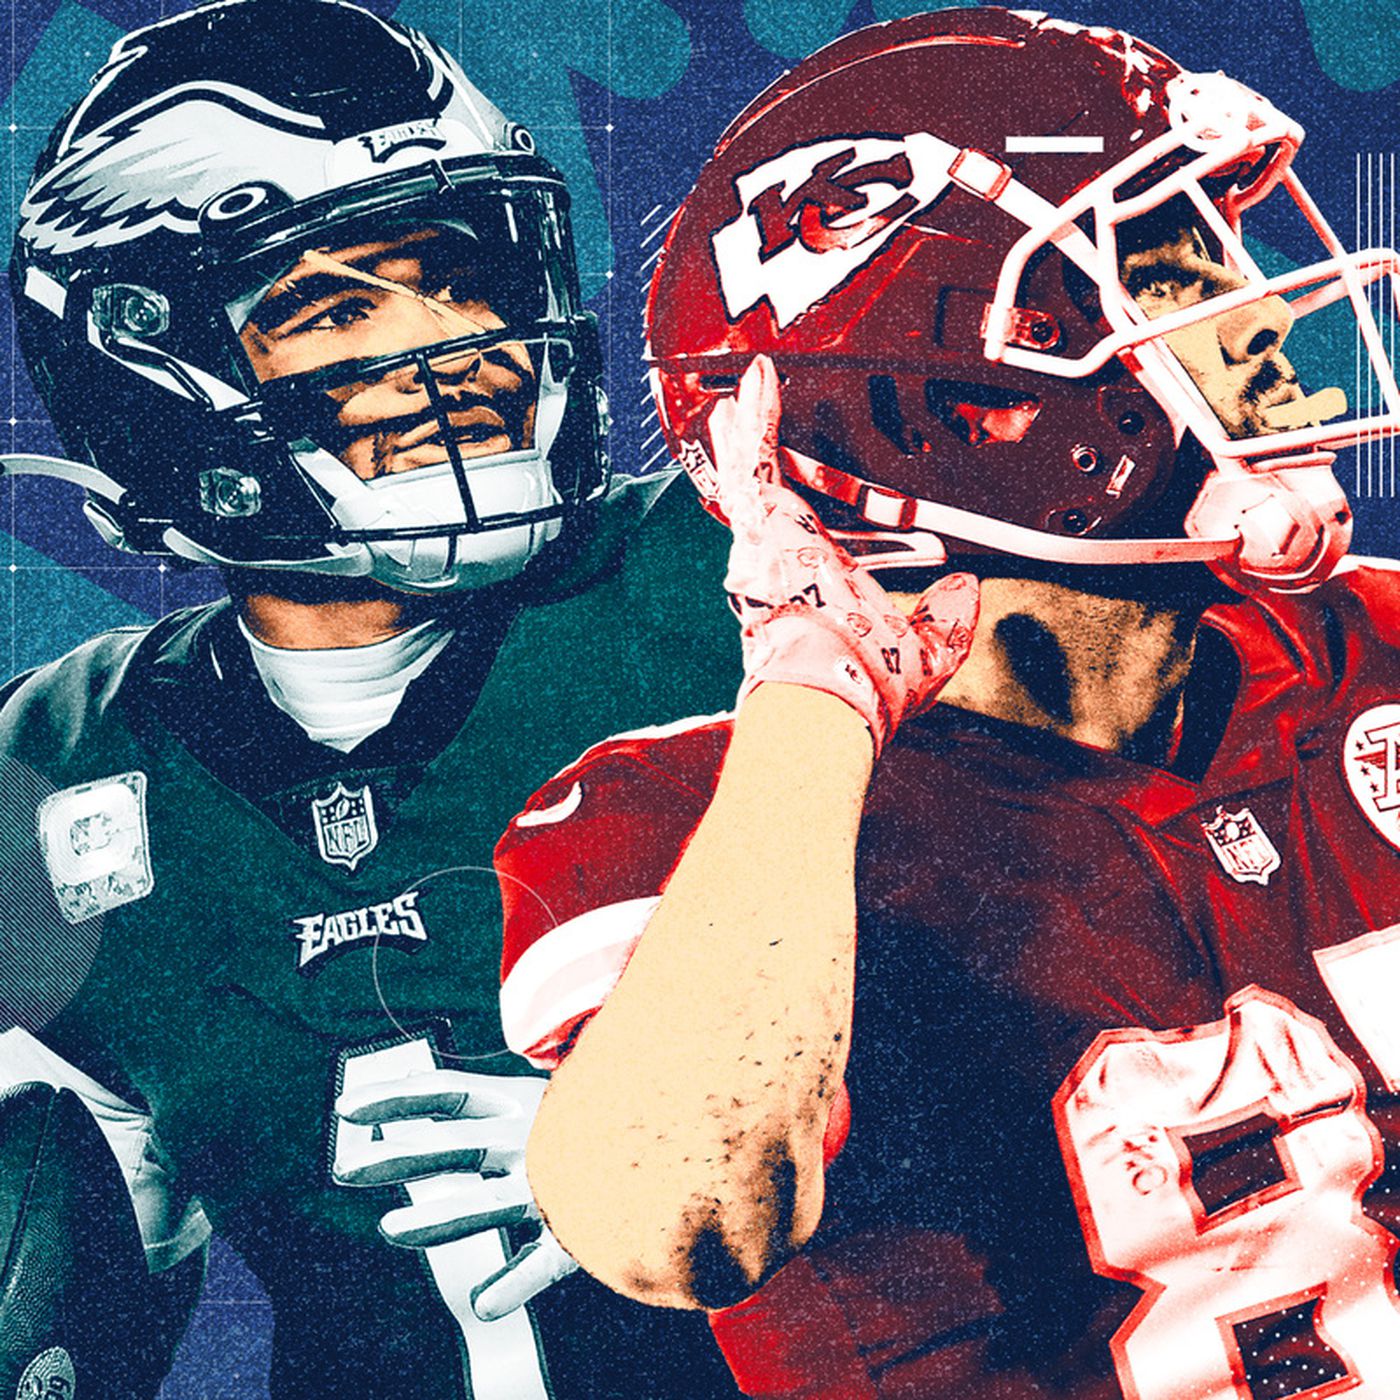 NFL Power Rankings, Week 7: Giants, Jets fly up the board